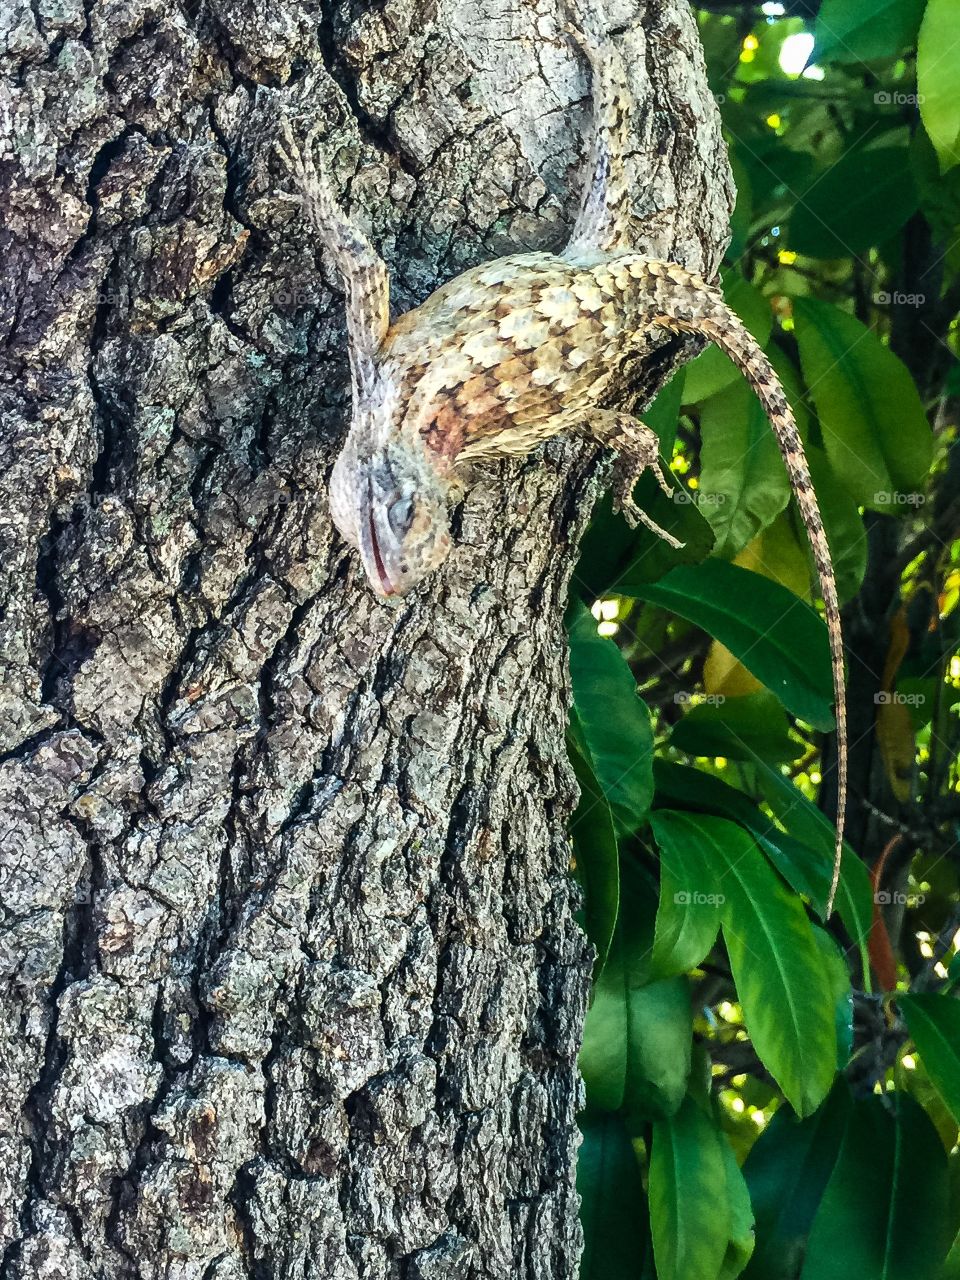 Sleeping lizard on tree